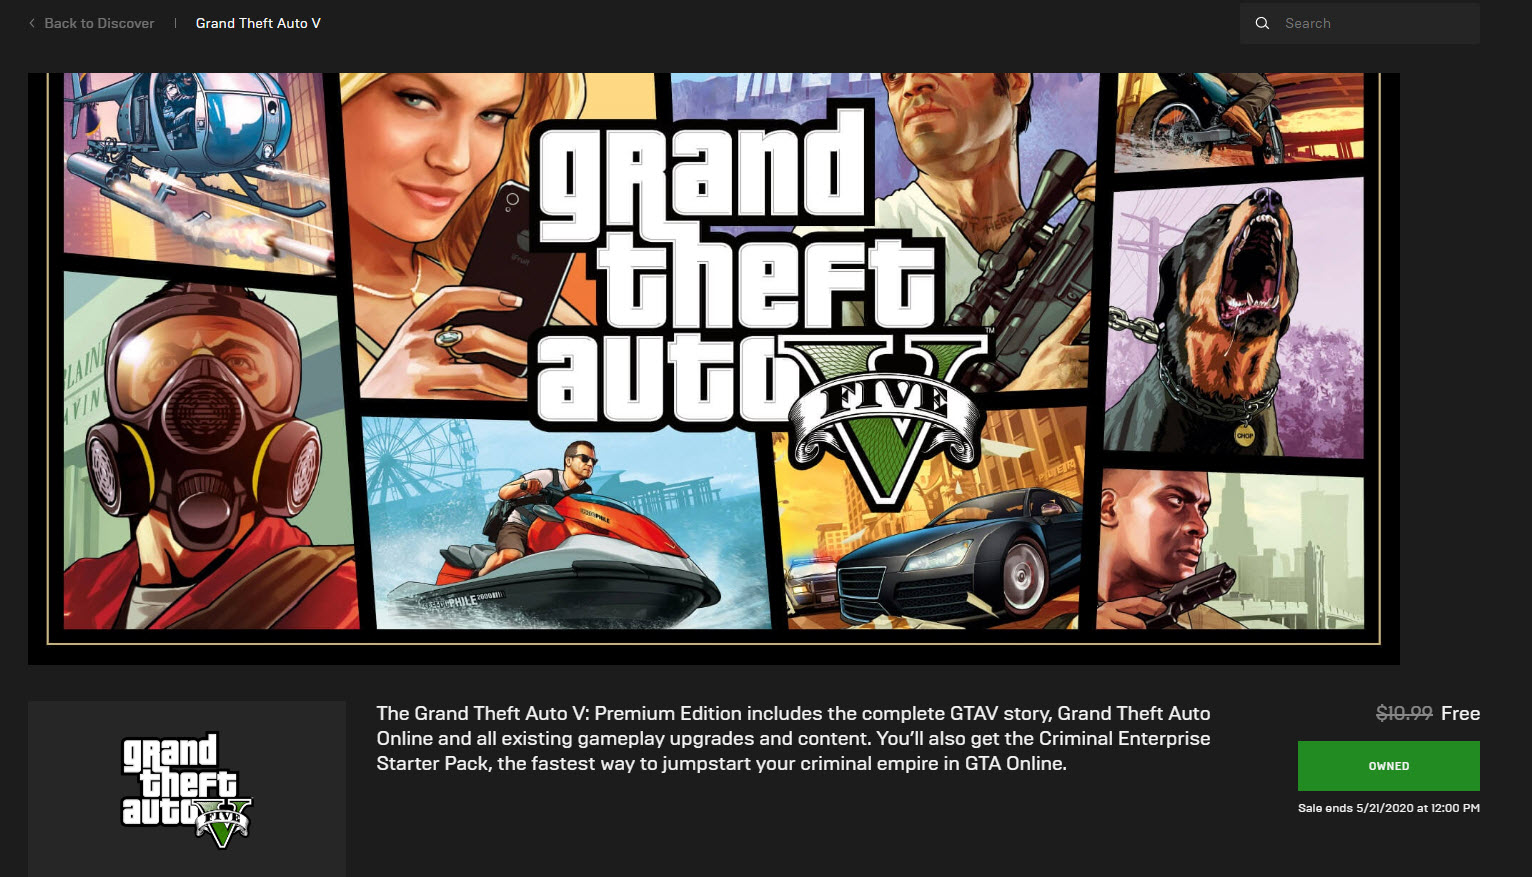 Код 134 rockstar games. ГТА 5 премиум. Grand Theft auto v Epic games. ГТА 5 премиум эдишн. ГТА 5 ЭПИК геймс.